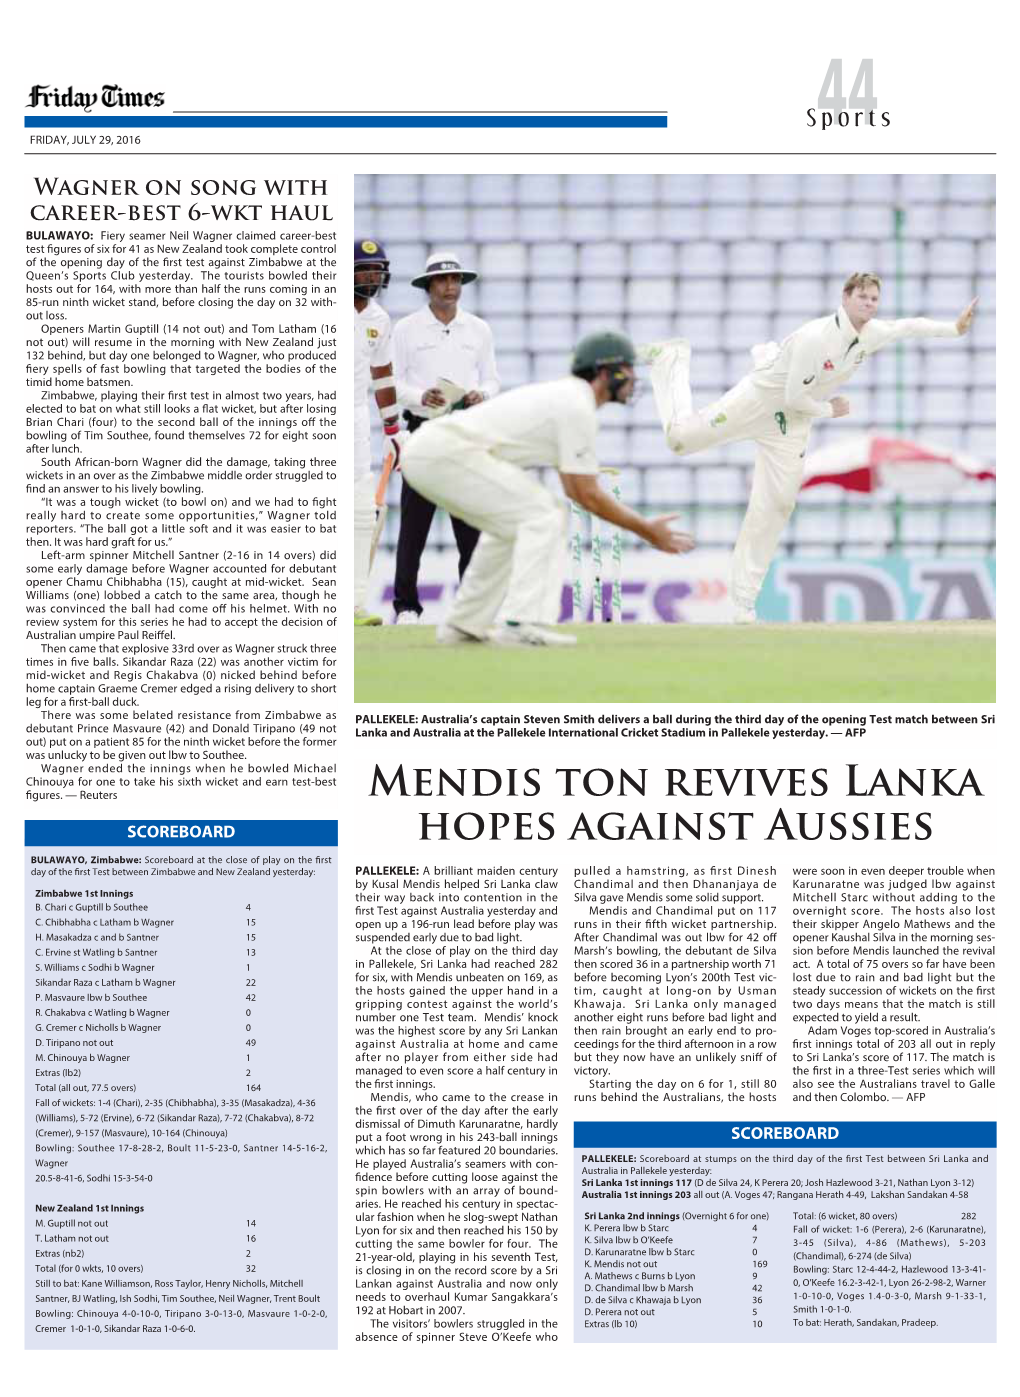 Mendis Ton Revives Lanka Hopes Against Aussies